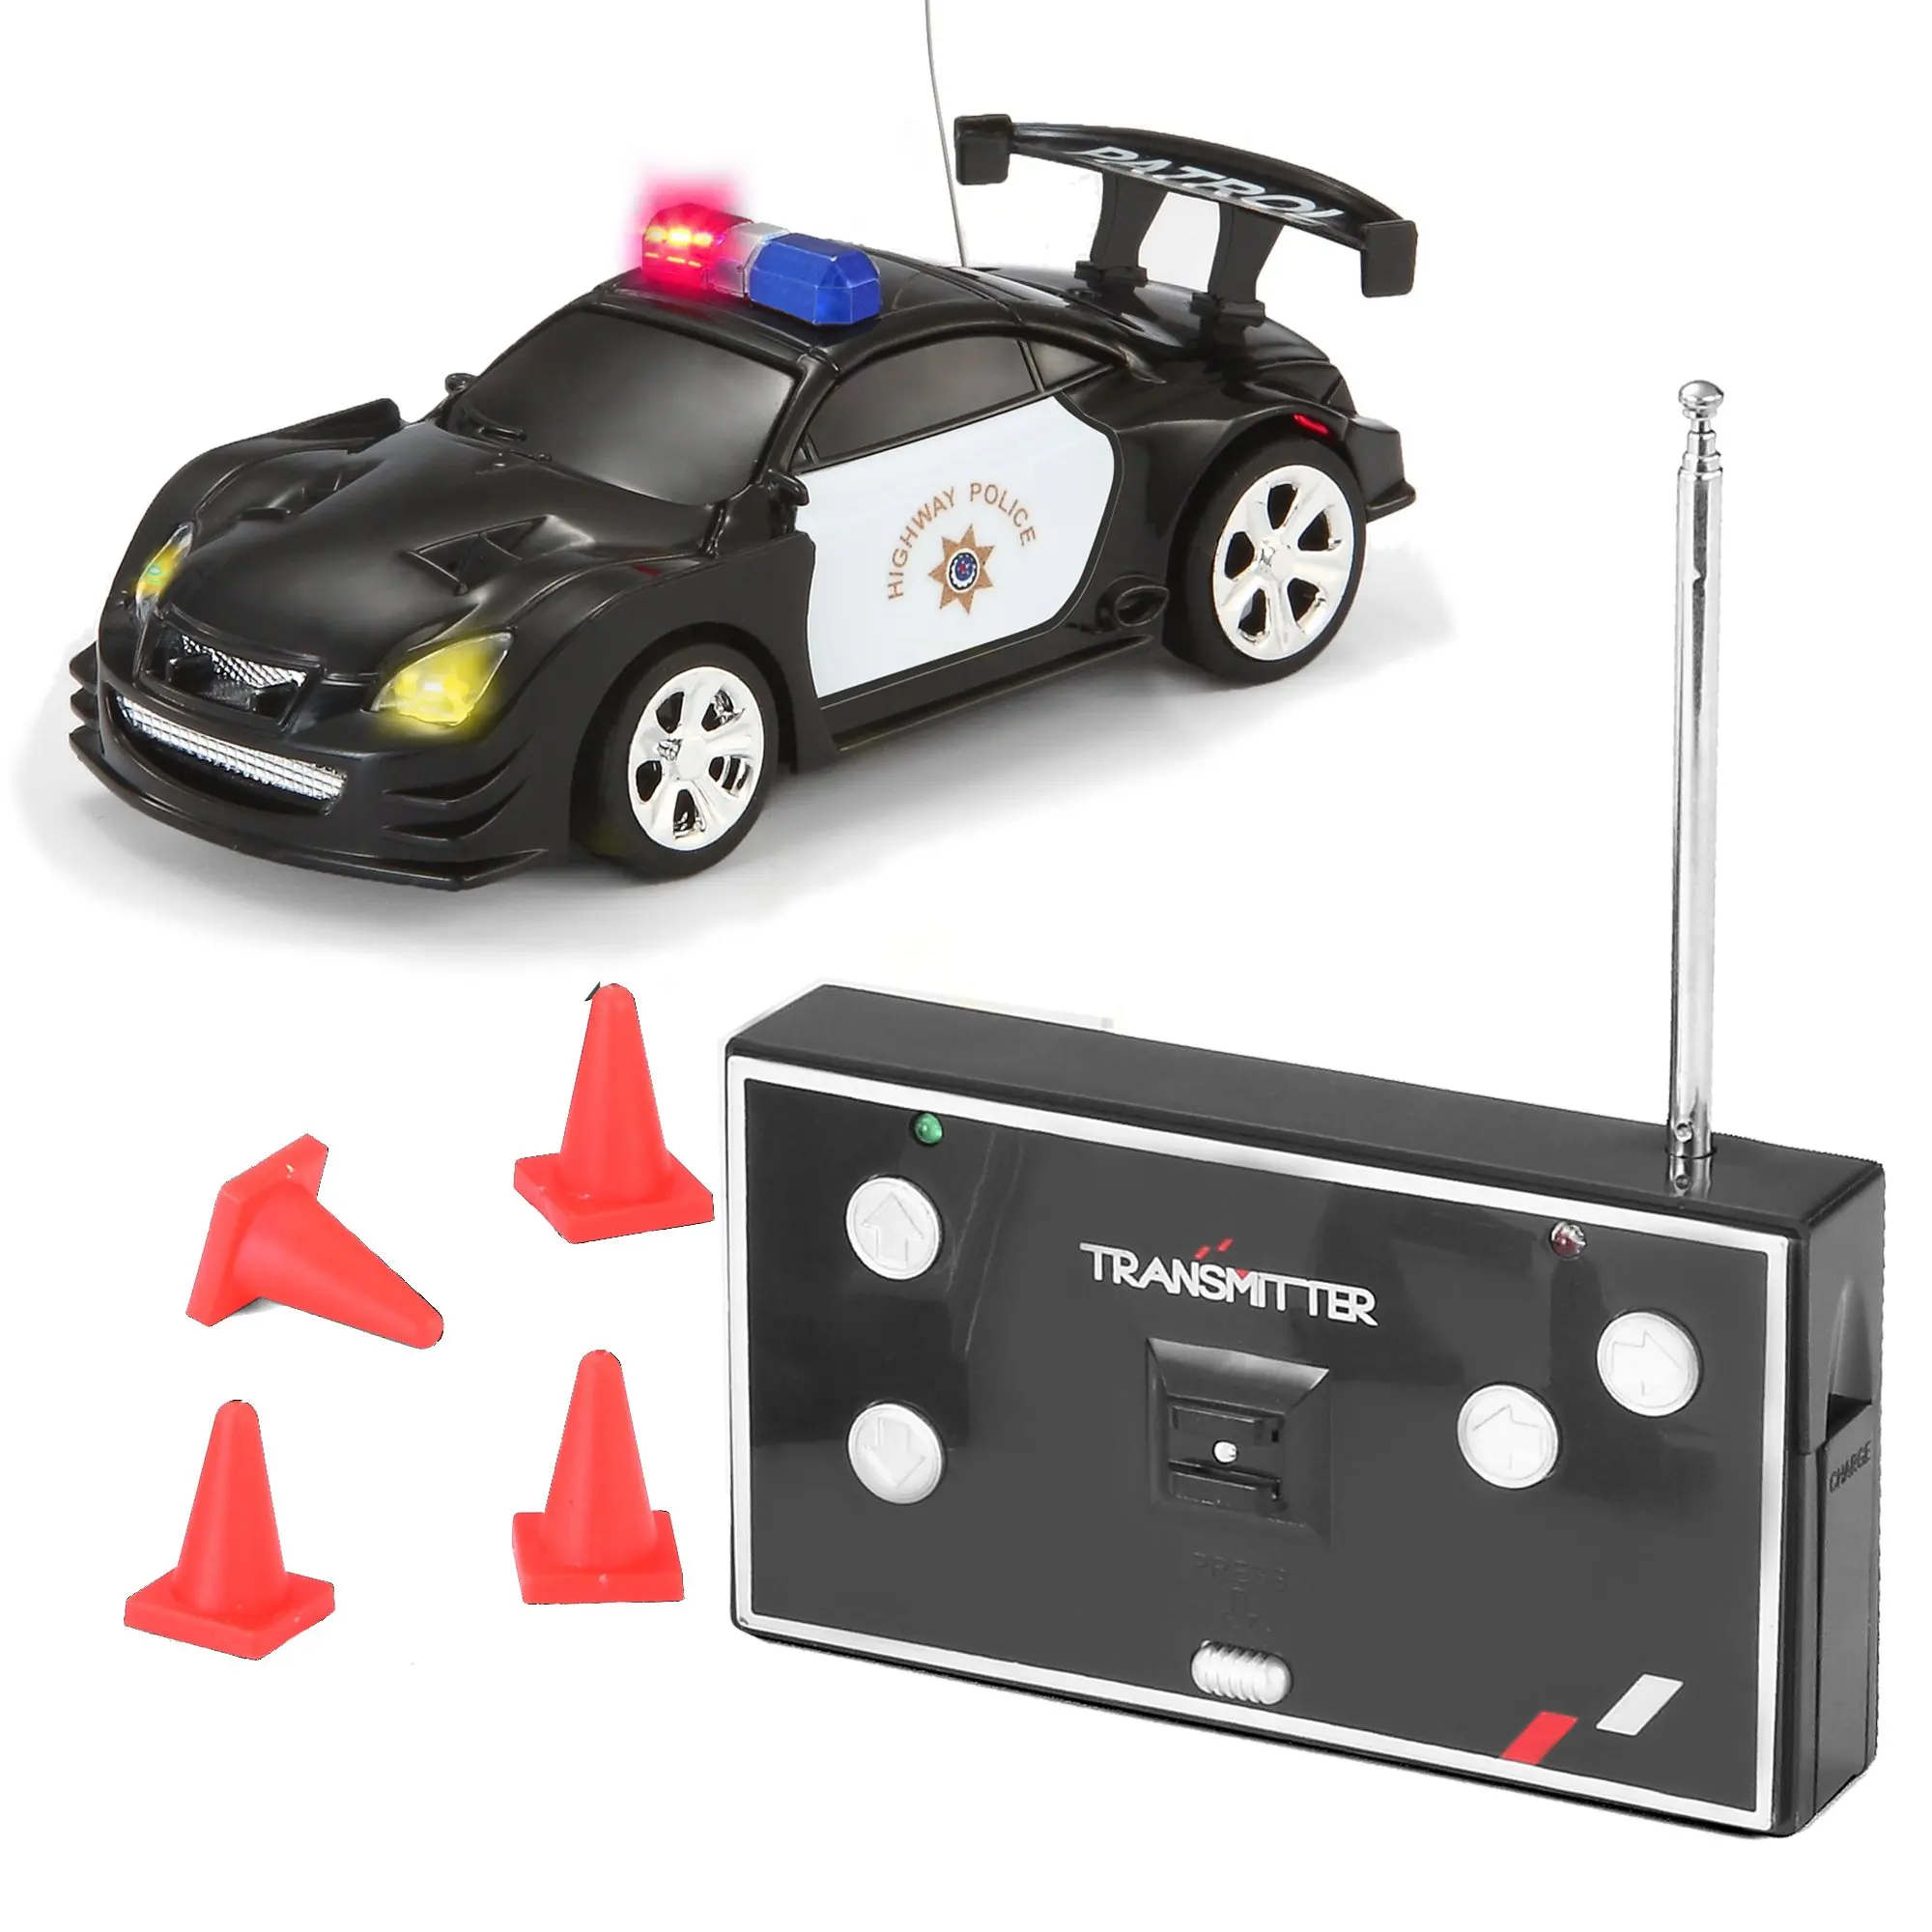 toy police siren